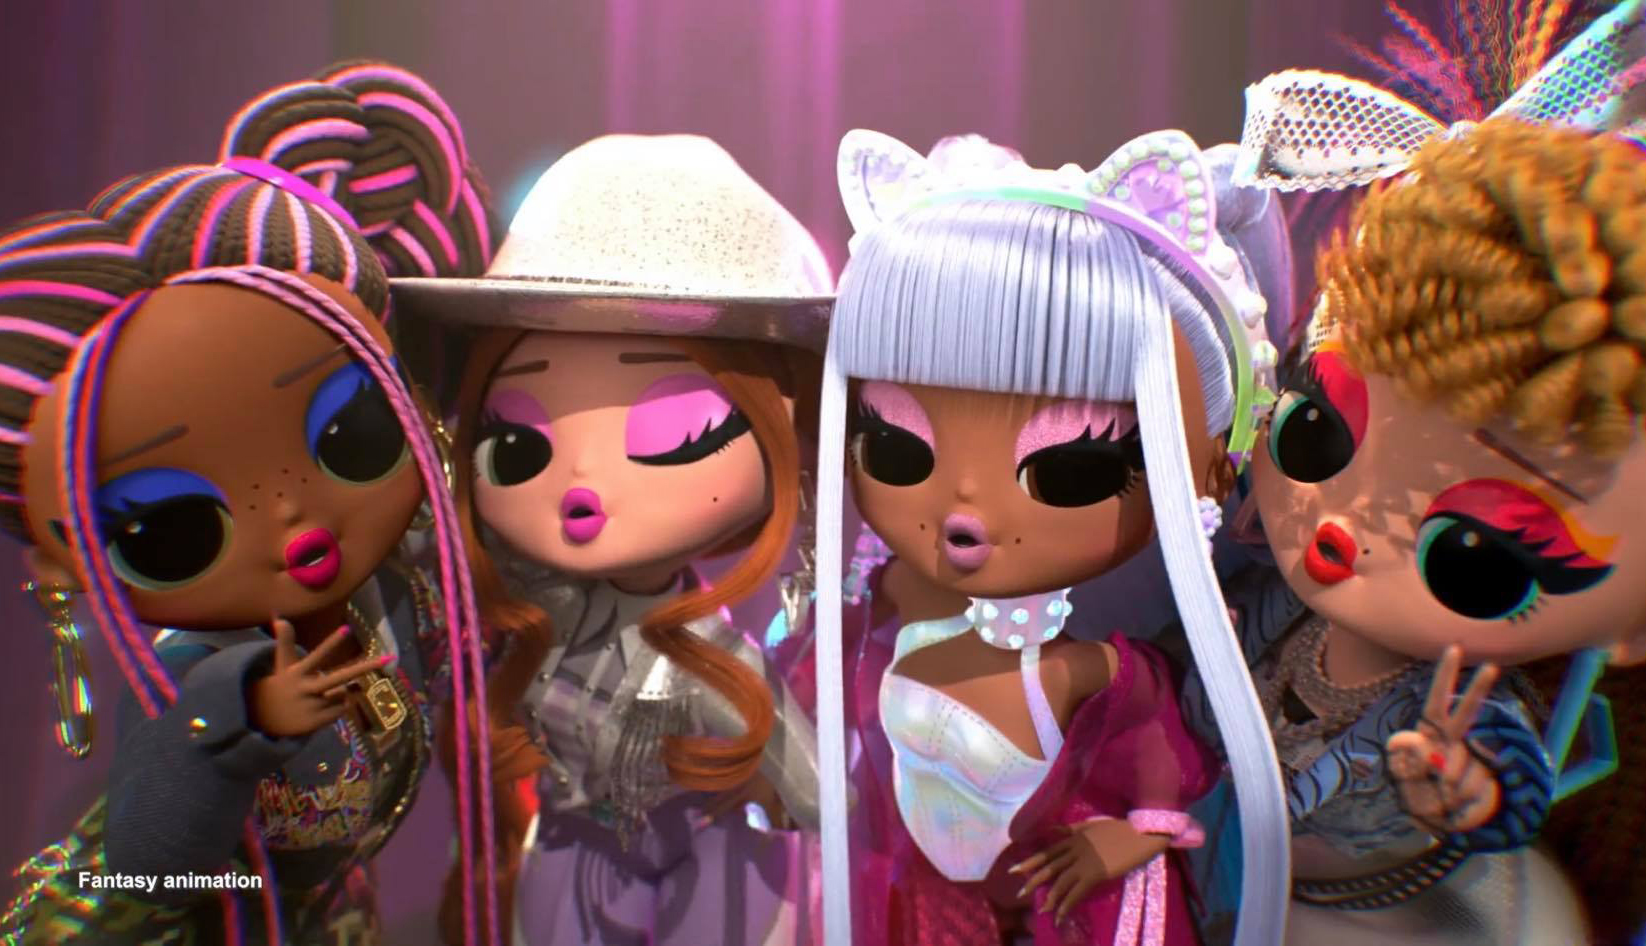 LOL OMG Remix dolls animated versions of Kitty K, Honeyliciou, Pop B.B